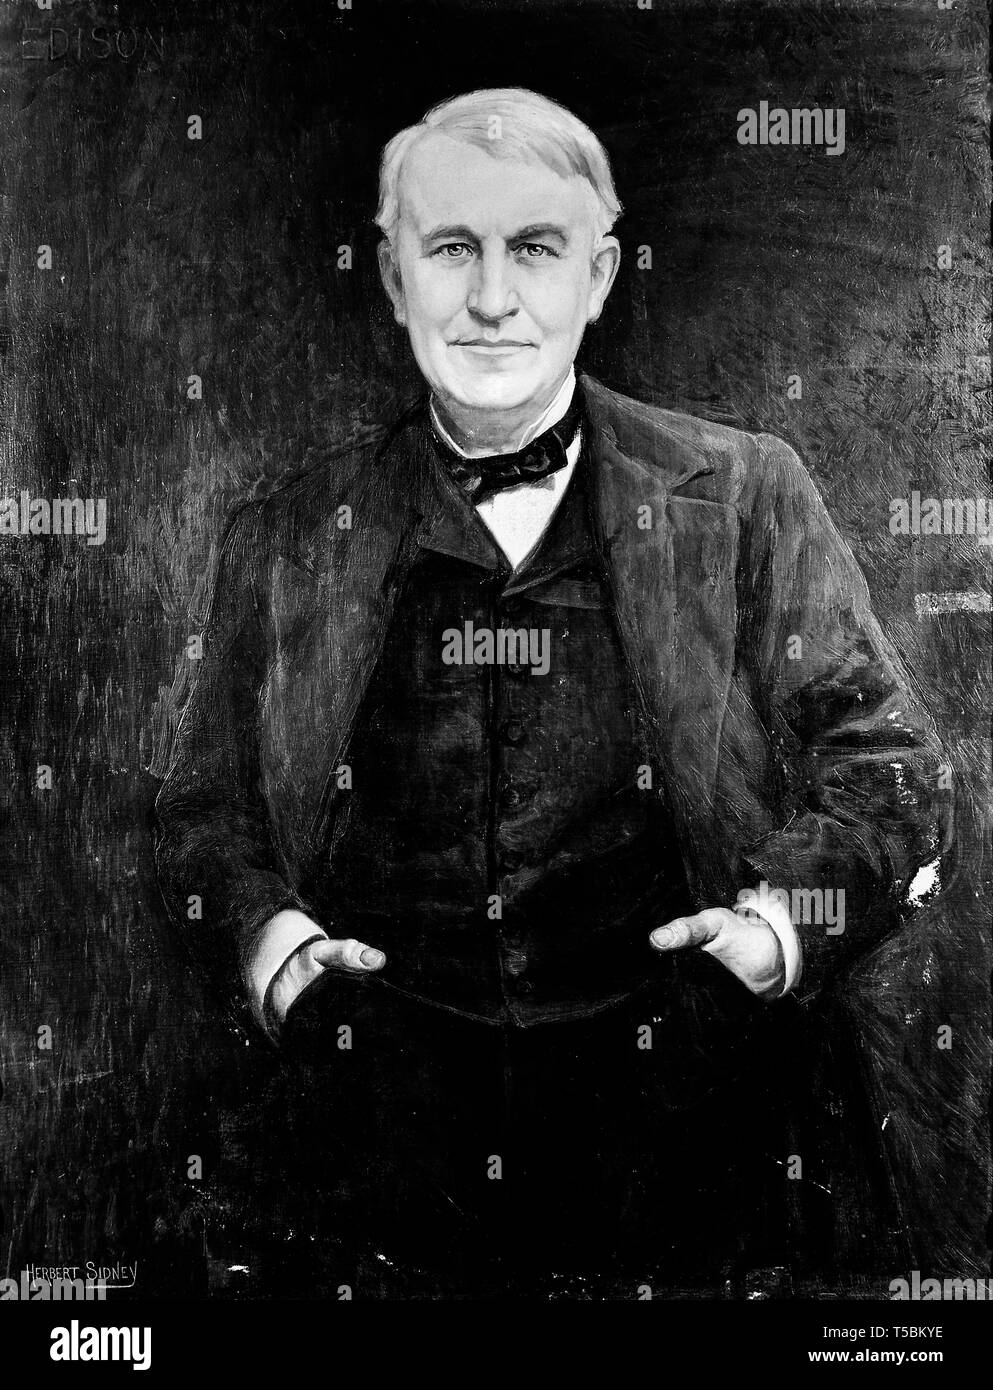 Thomas Edison (1847-1931), portrait painting by Herbert Sydney, 19th Century Stock Photo